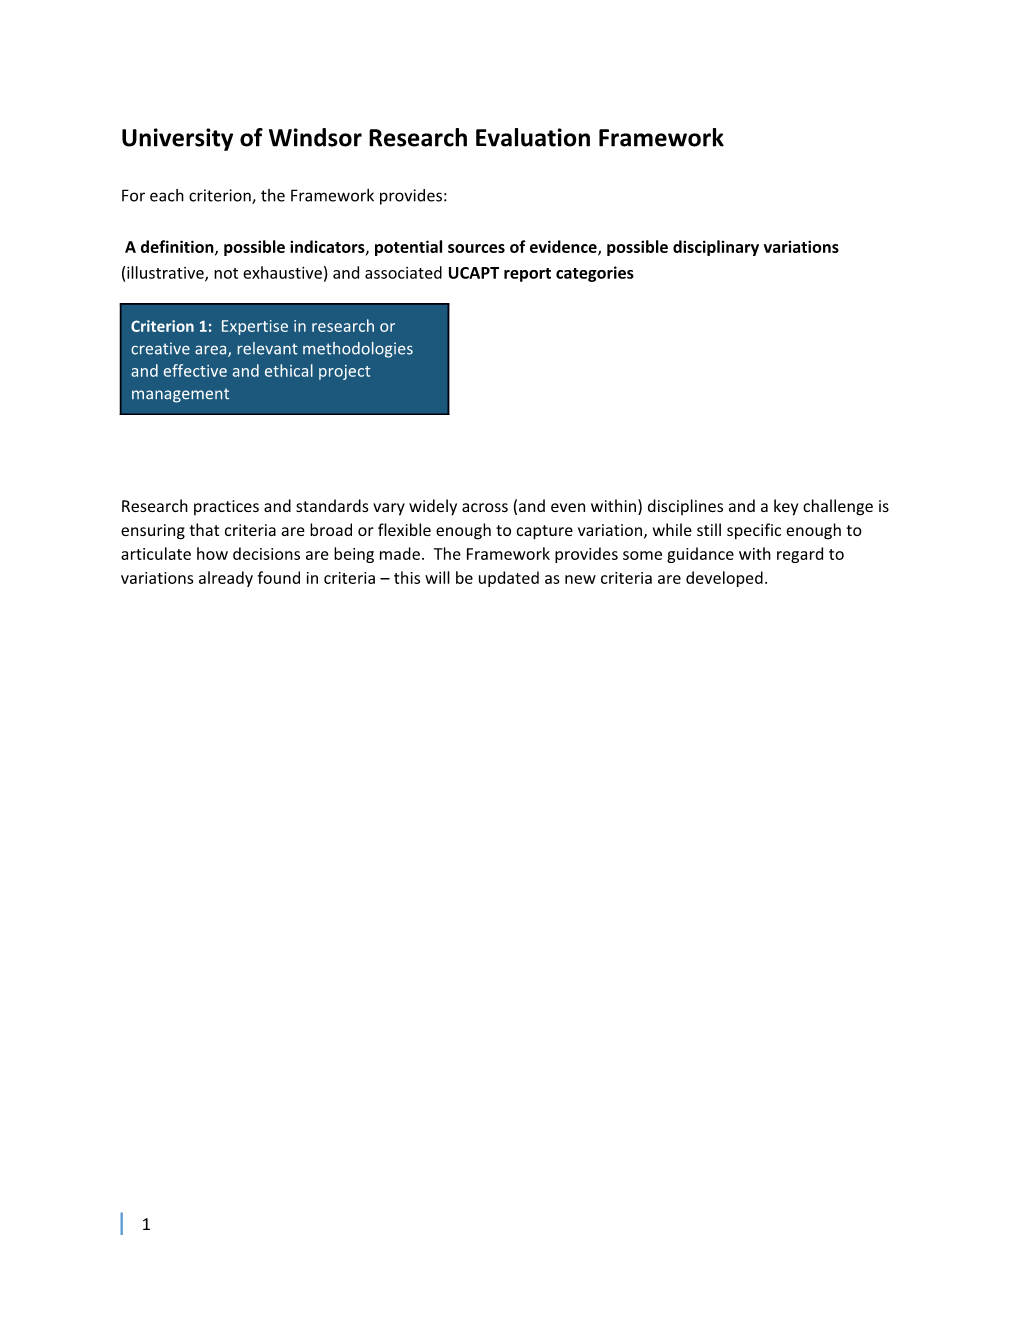 University of Windsor Research Evaluation Framework August 2016